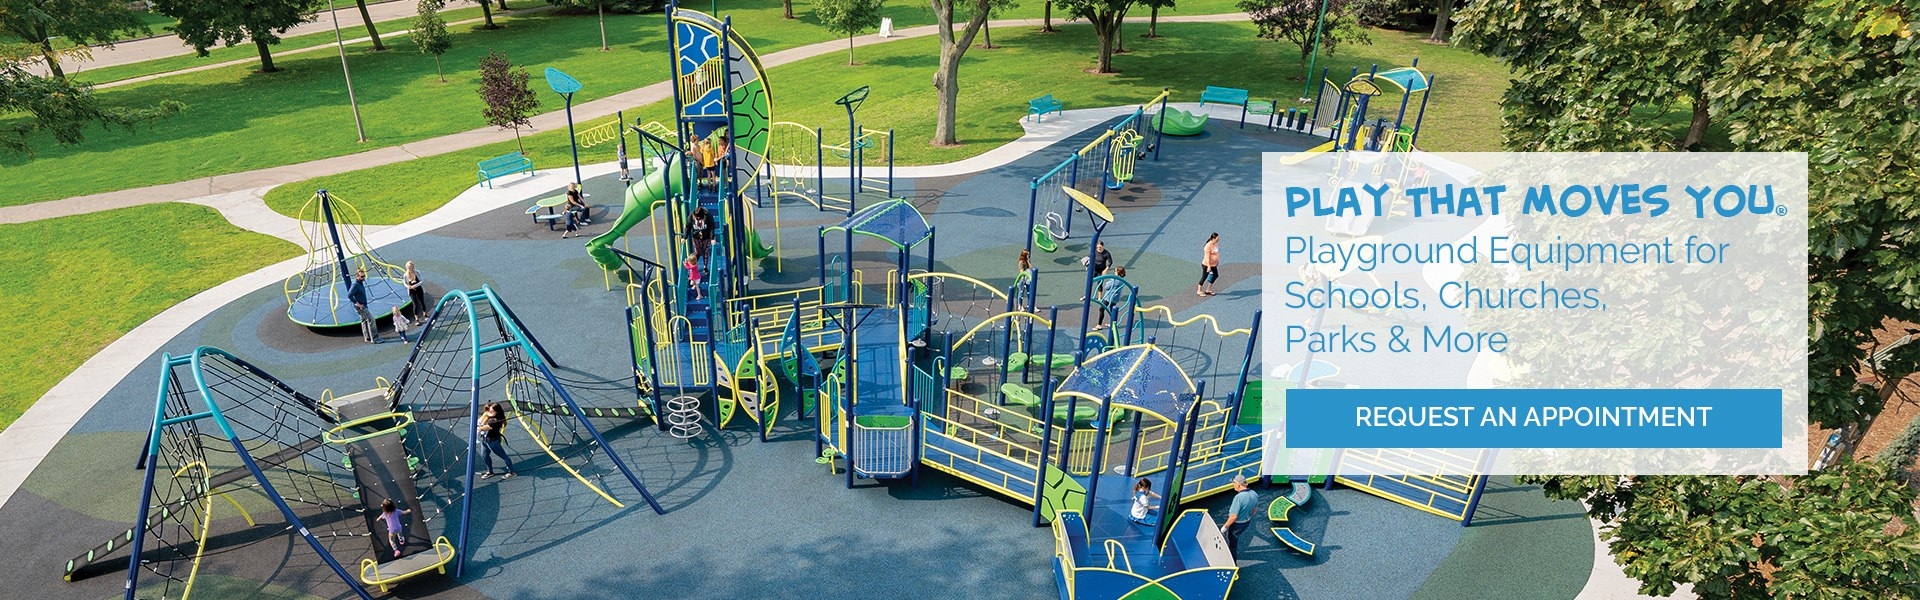 pw-playgrounds1.jpg